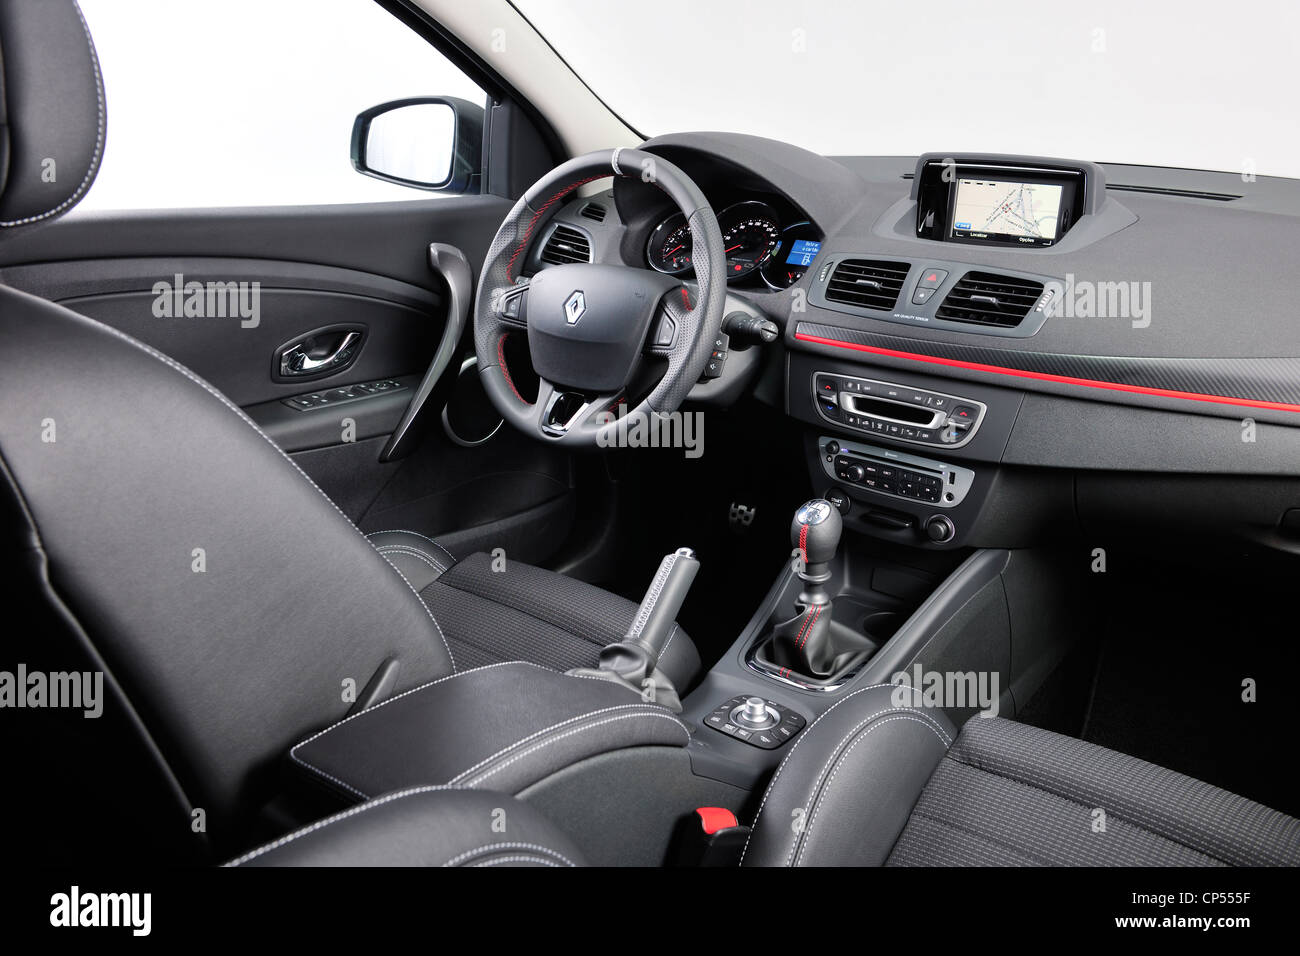 Renault Megane, vehicle interior, studio shot Stock Photo - Alamy